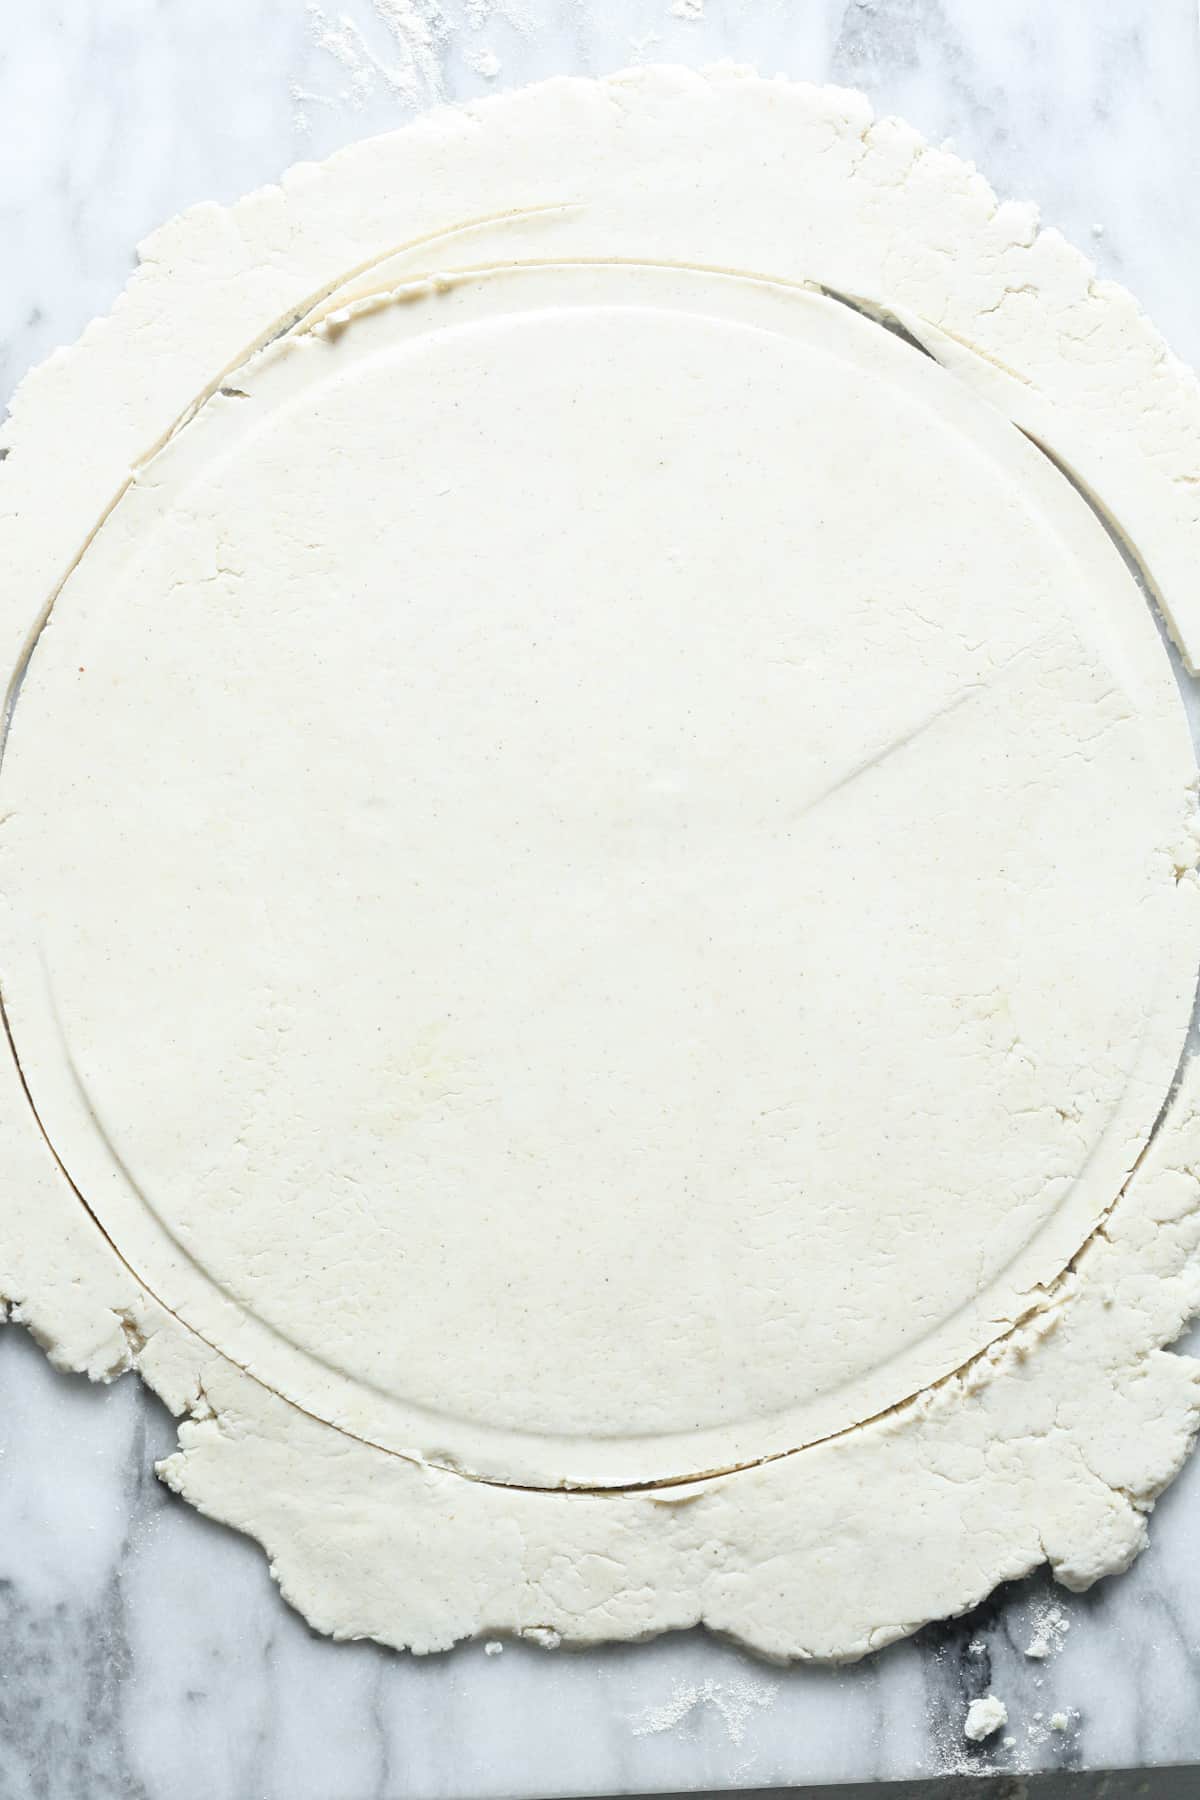 Round circle of dough.